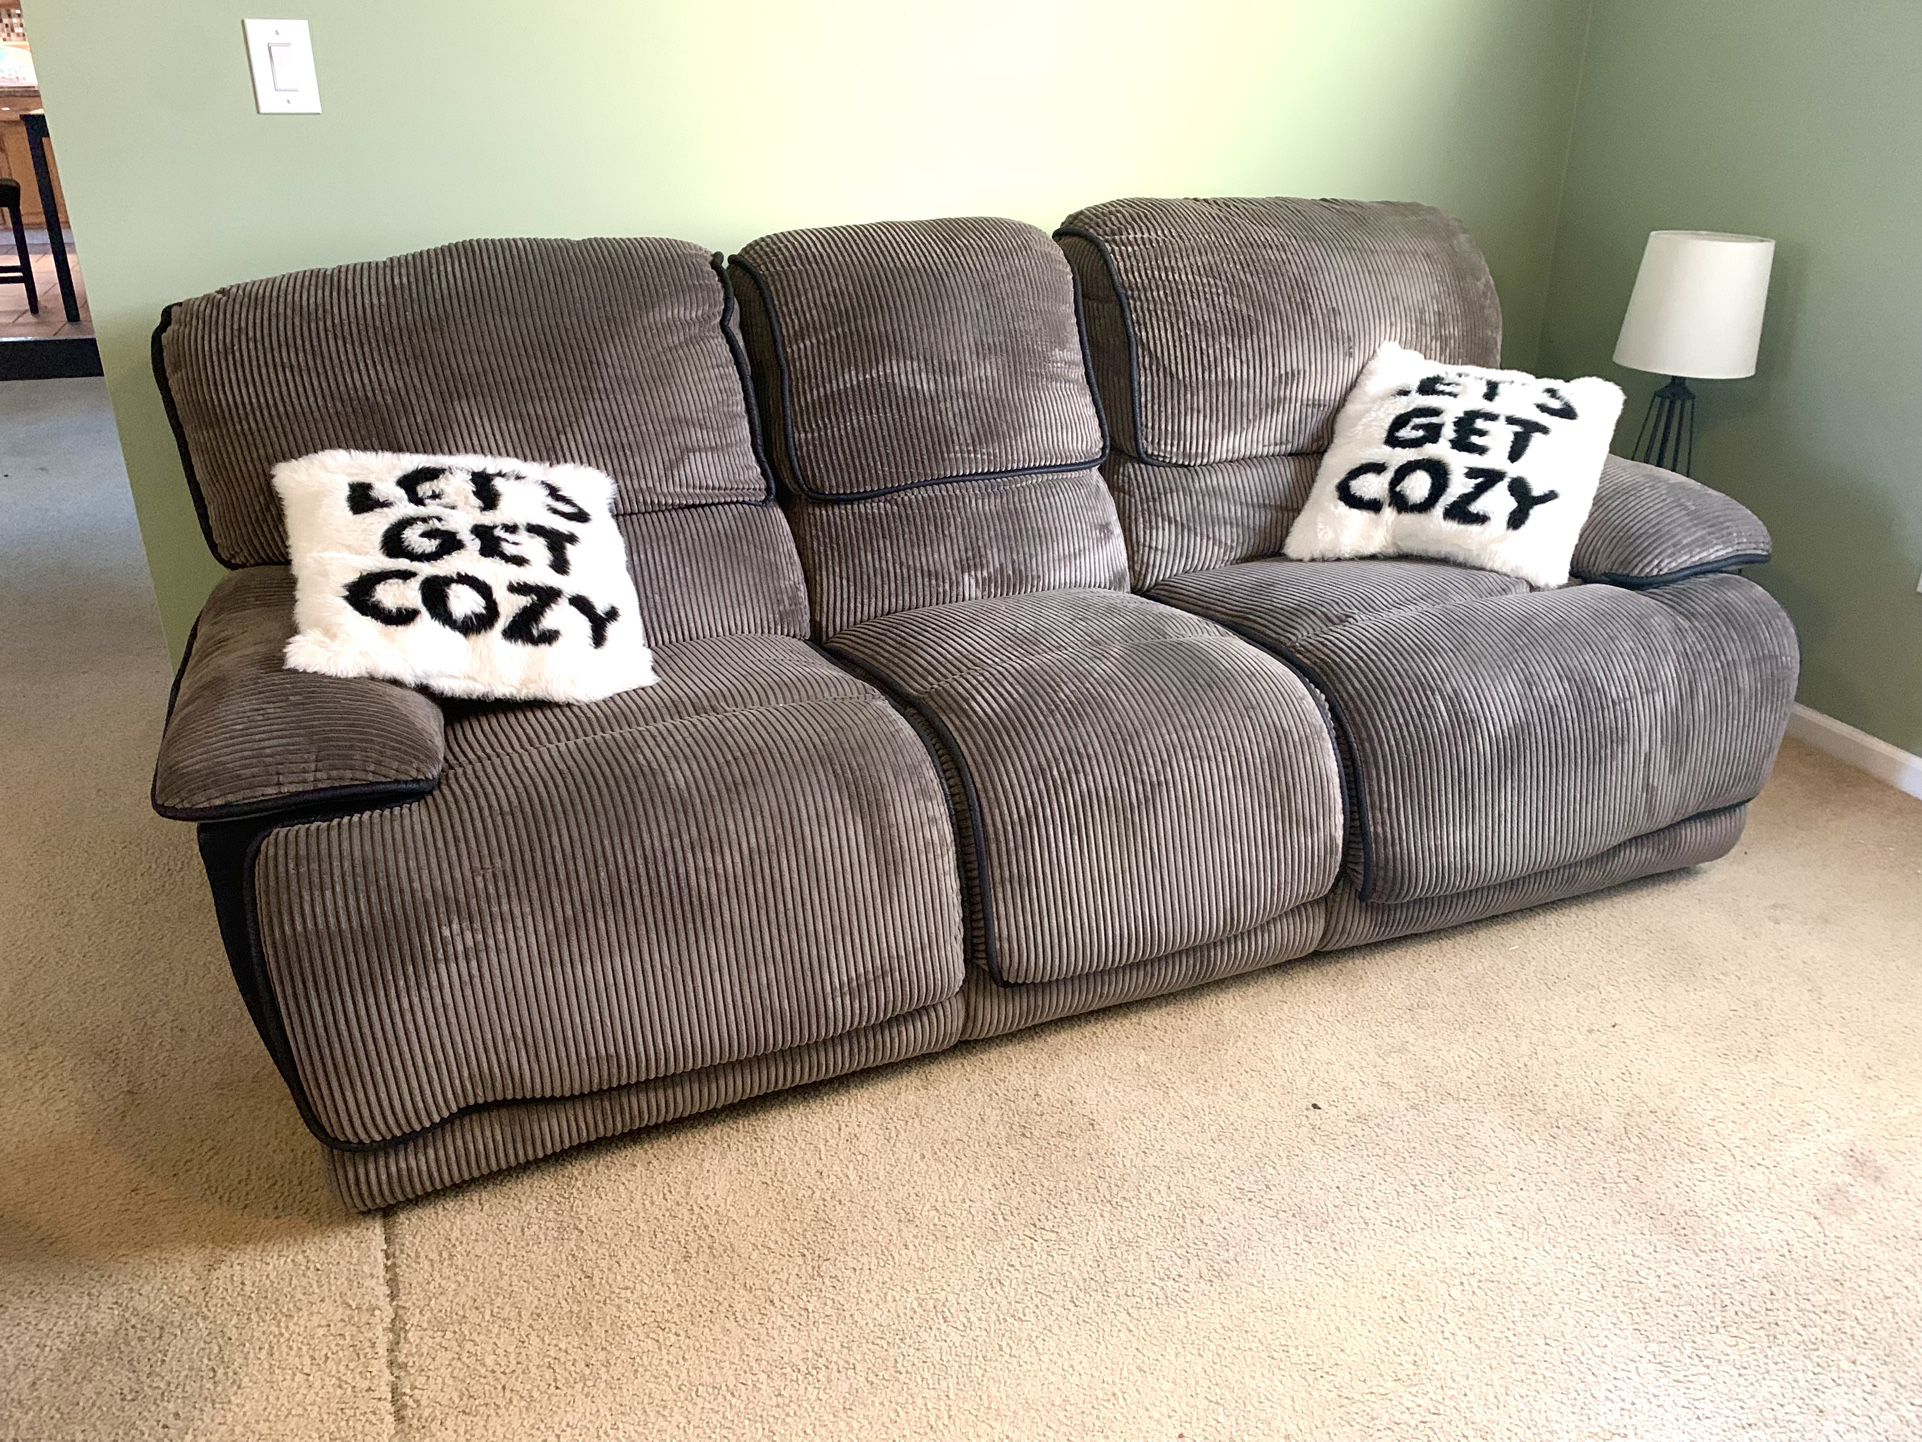 Recline Sofa Gray Good Conditions 